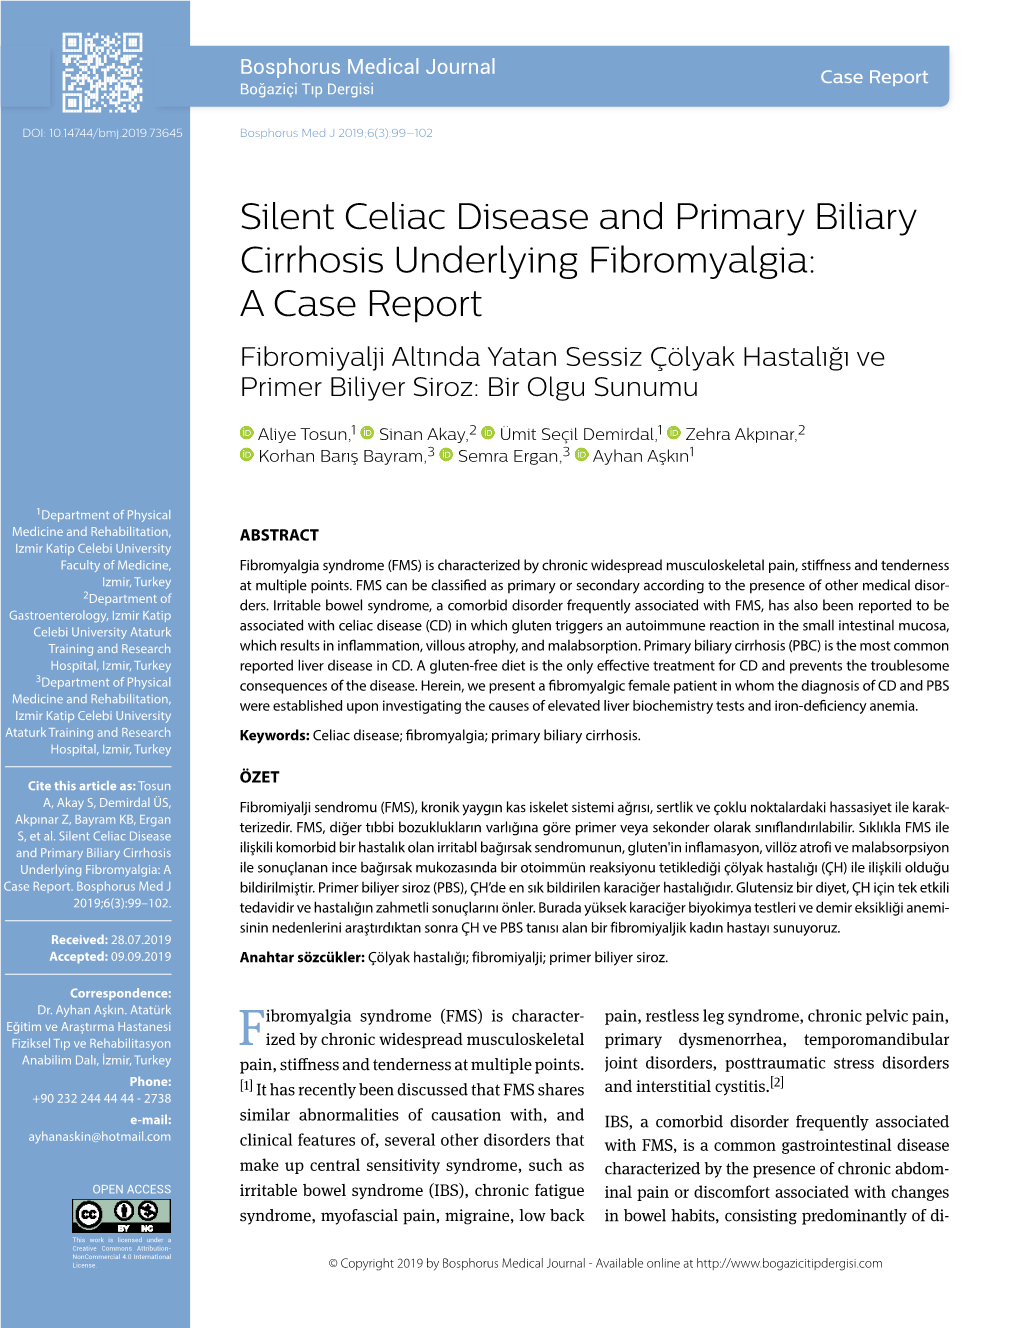 Silent Celiac Disease and Primary Biliary Cirrhosis Underlying